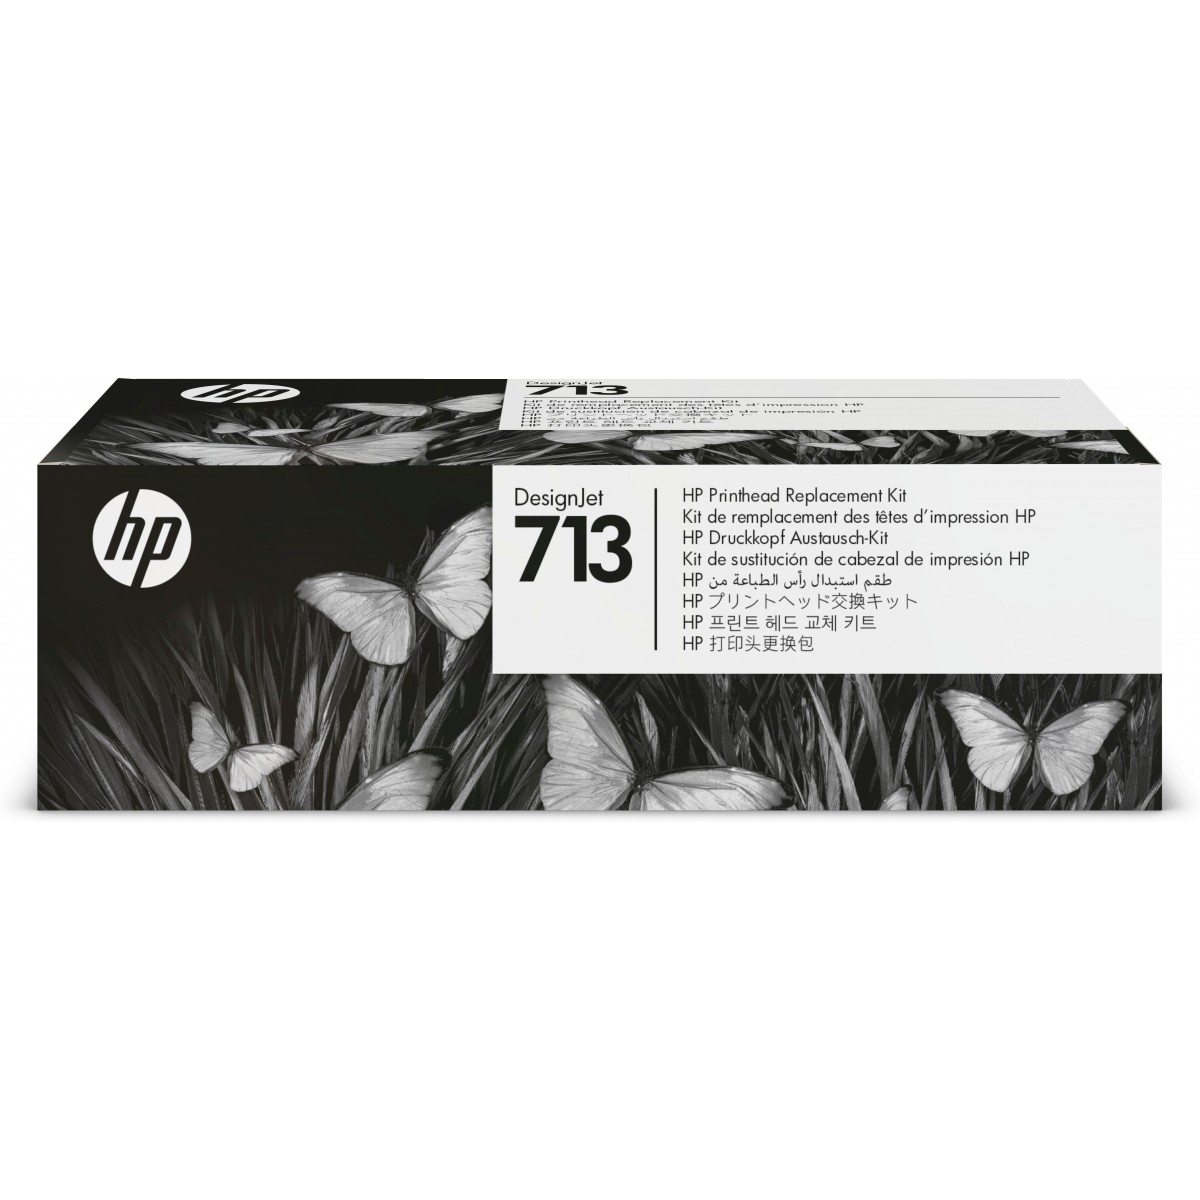 HP 713 - HP DesignJet T210 - T230 - T250 - T630 - T650 - Thermal inkjet - Black - Cyan - Magenta - Yellow - Malaysia - 314 mm - 